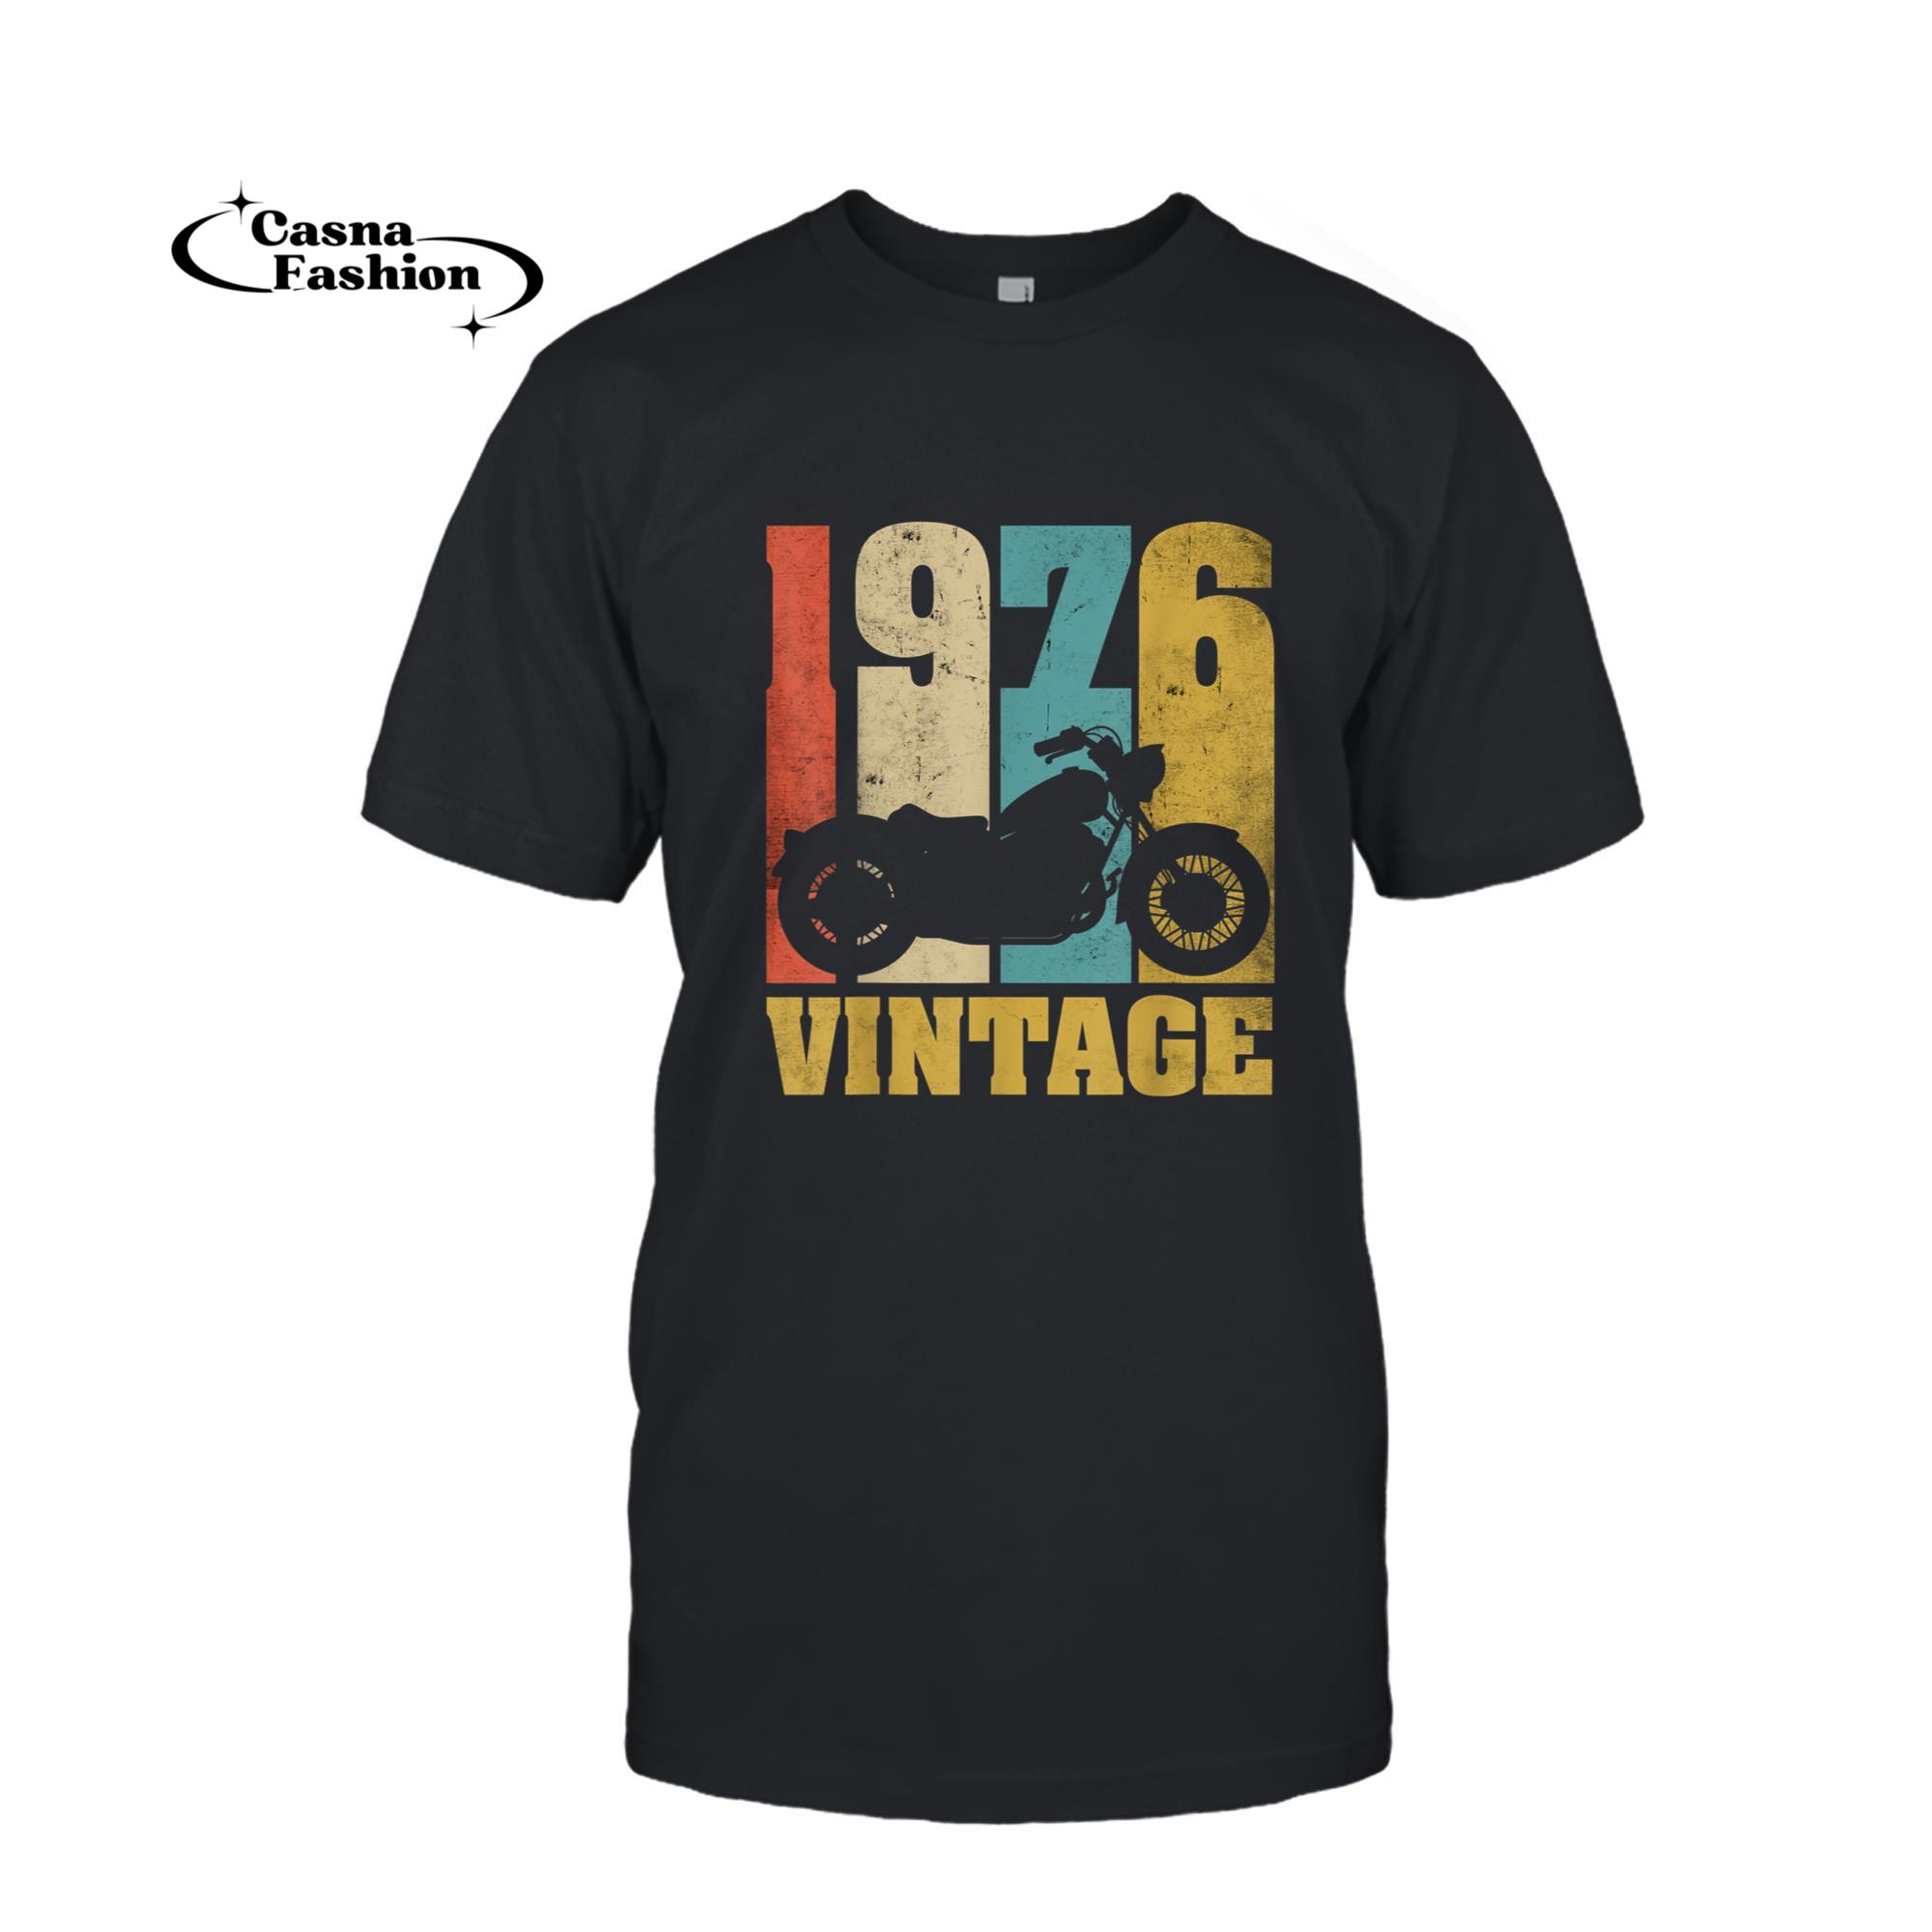 casnafashion_T-shirt_44th Birthday Biker Gift T-Shirt - Vintage 1976 Motocycle T-Shirt_T-shirt_Black